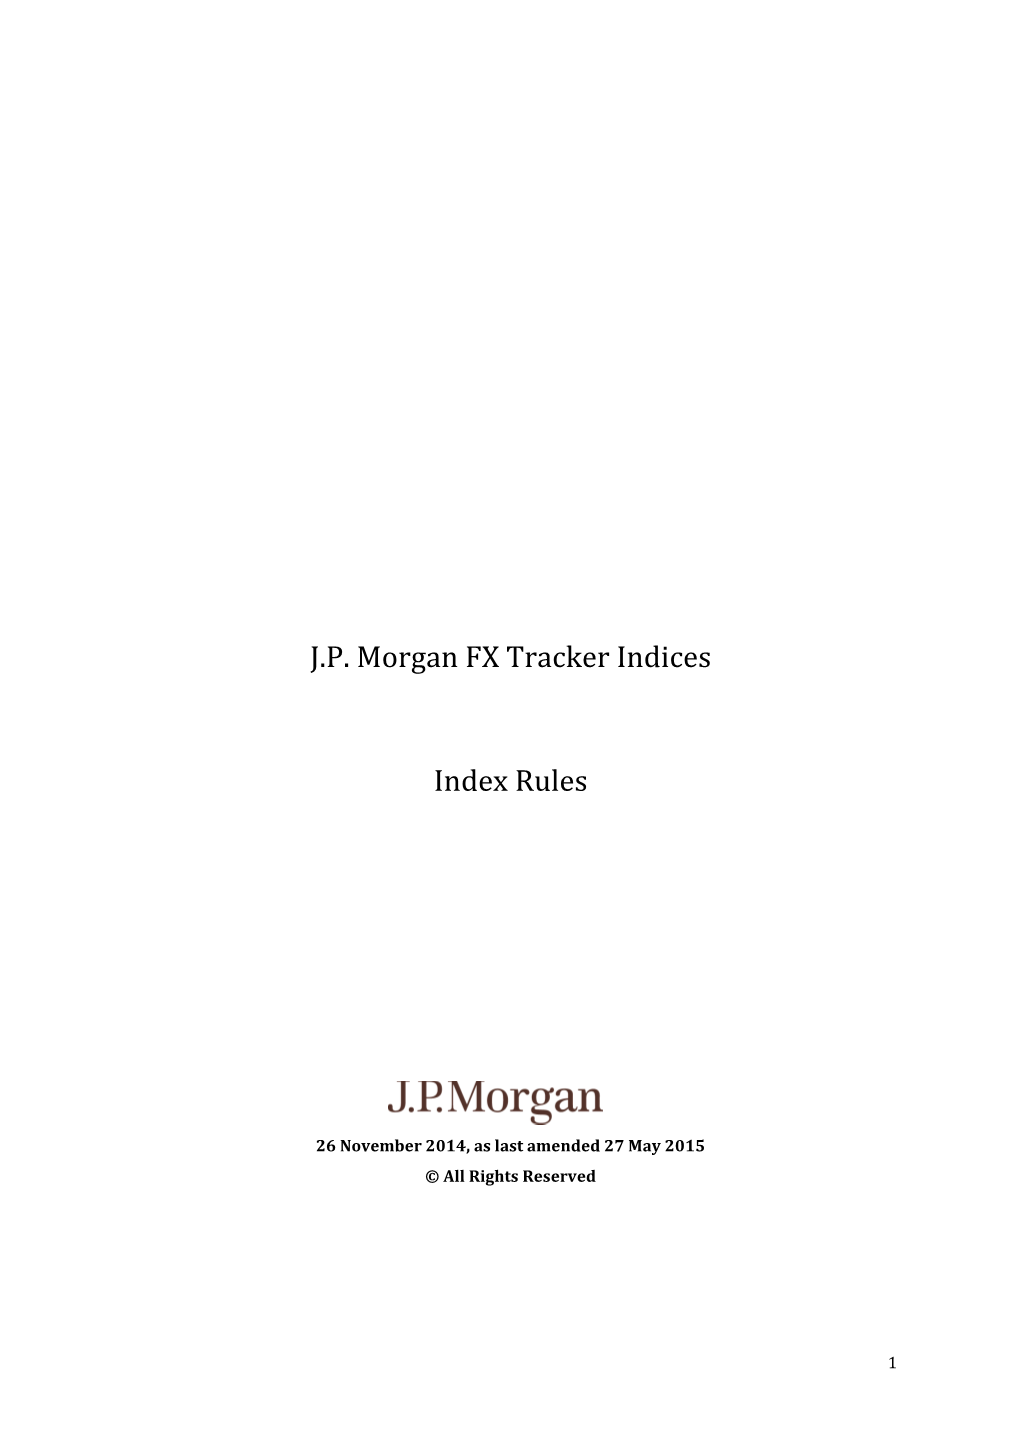 J.P. Morgan FX Tracker Indices Index Rules